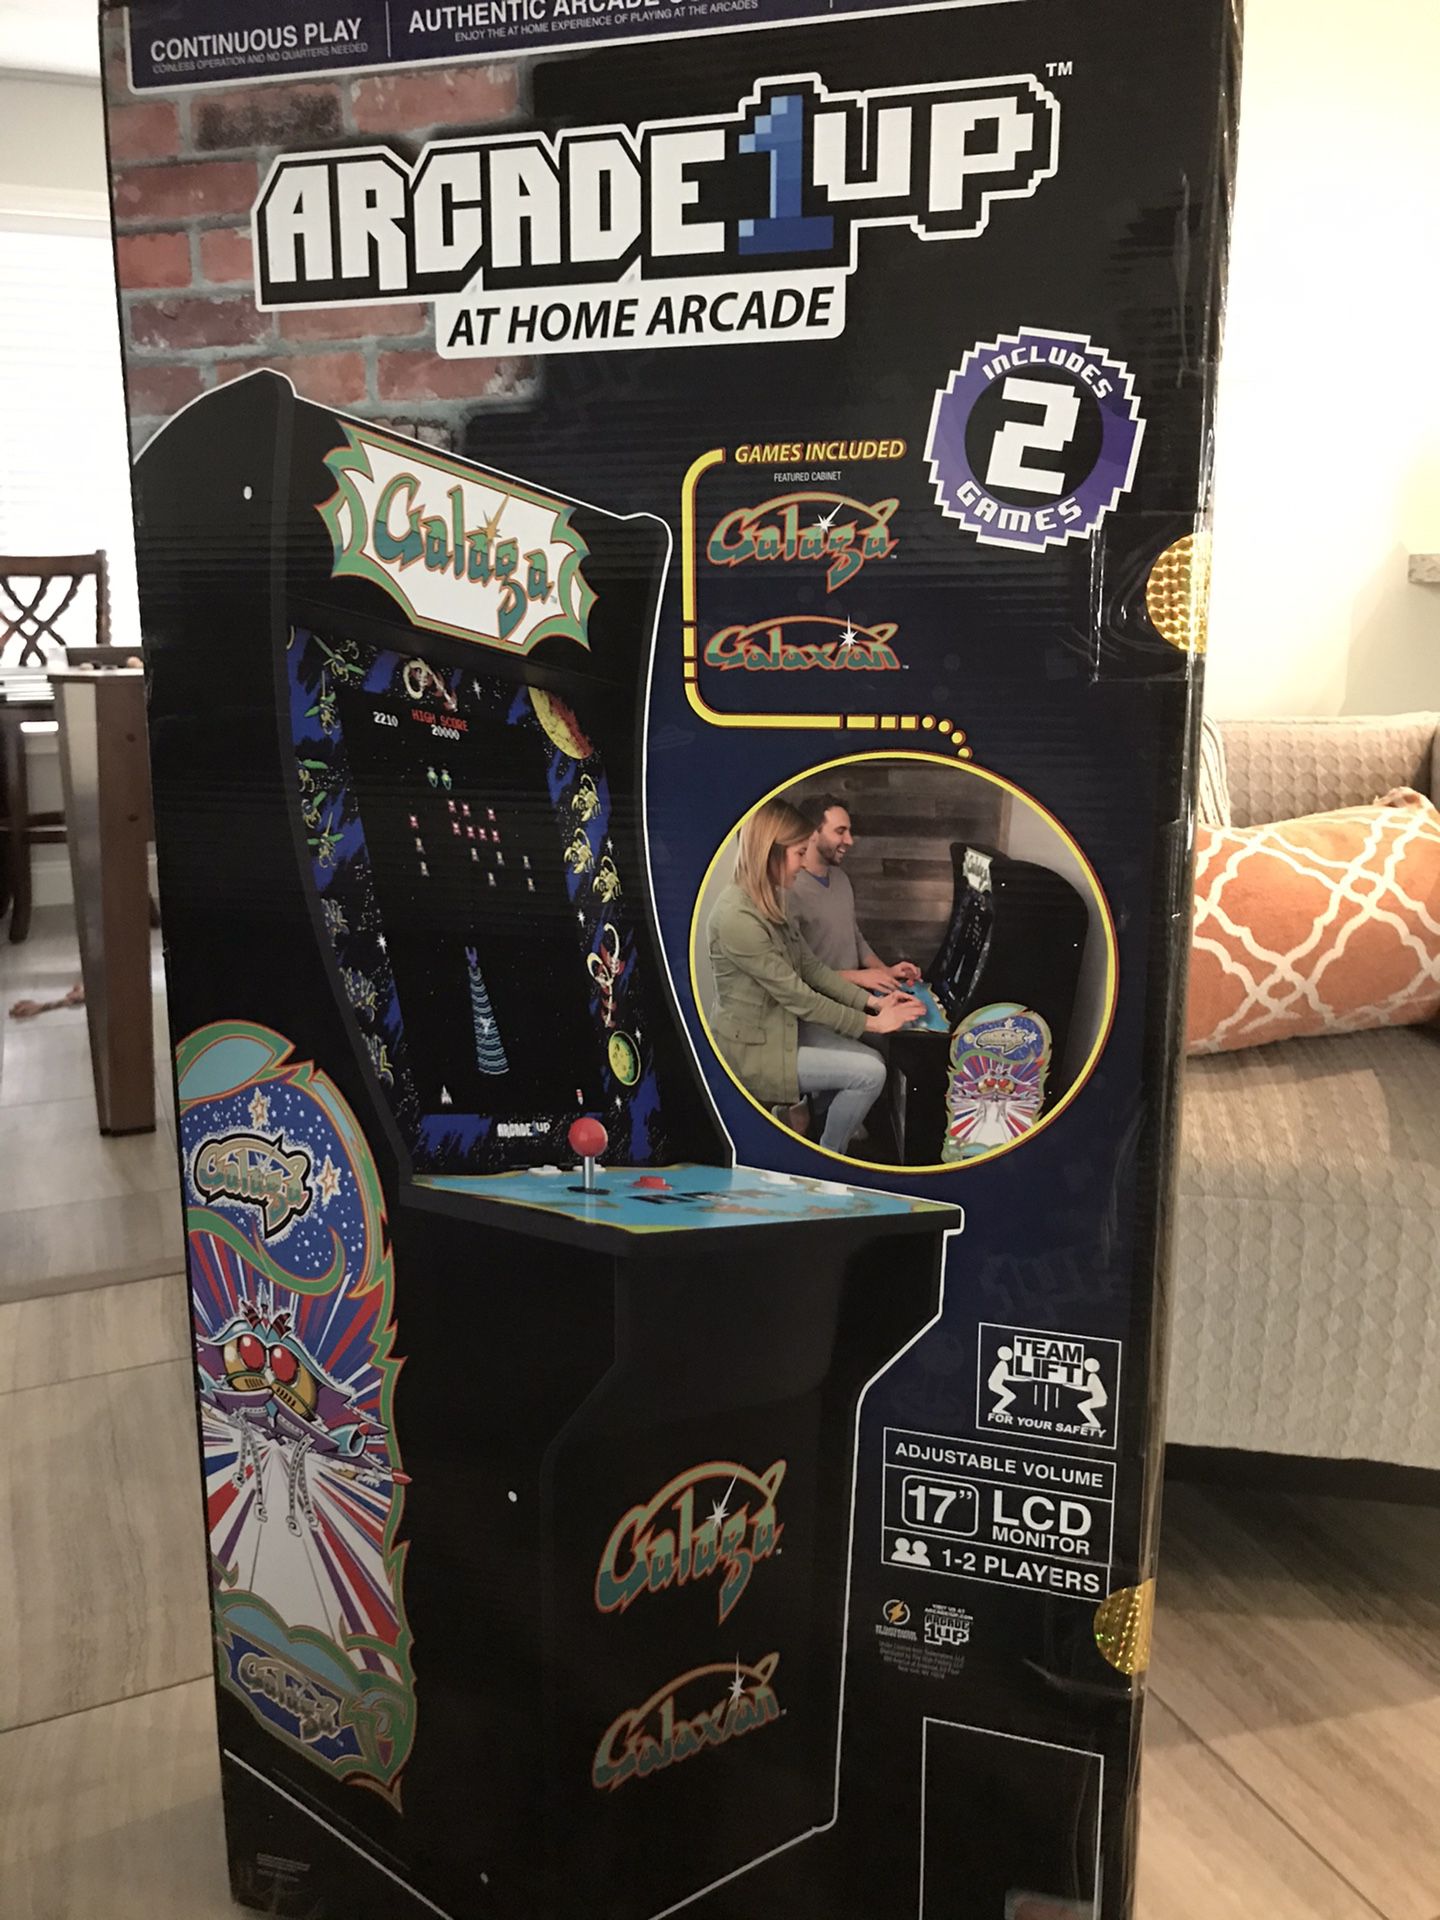 Arcade 1up Galaga Brand New in Box,